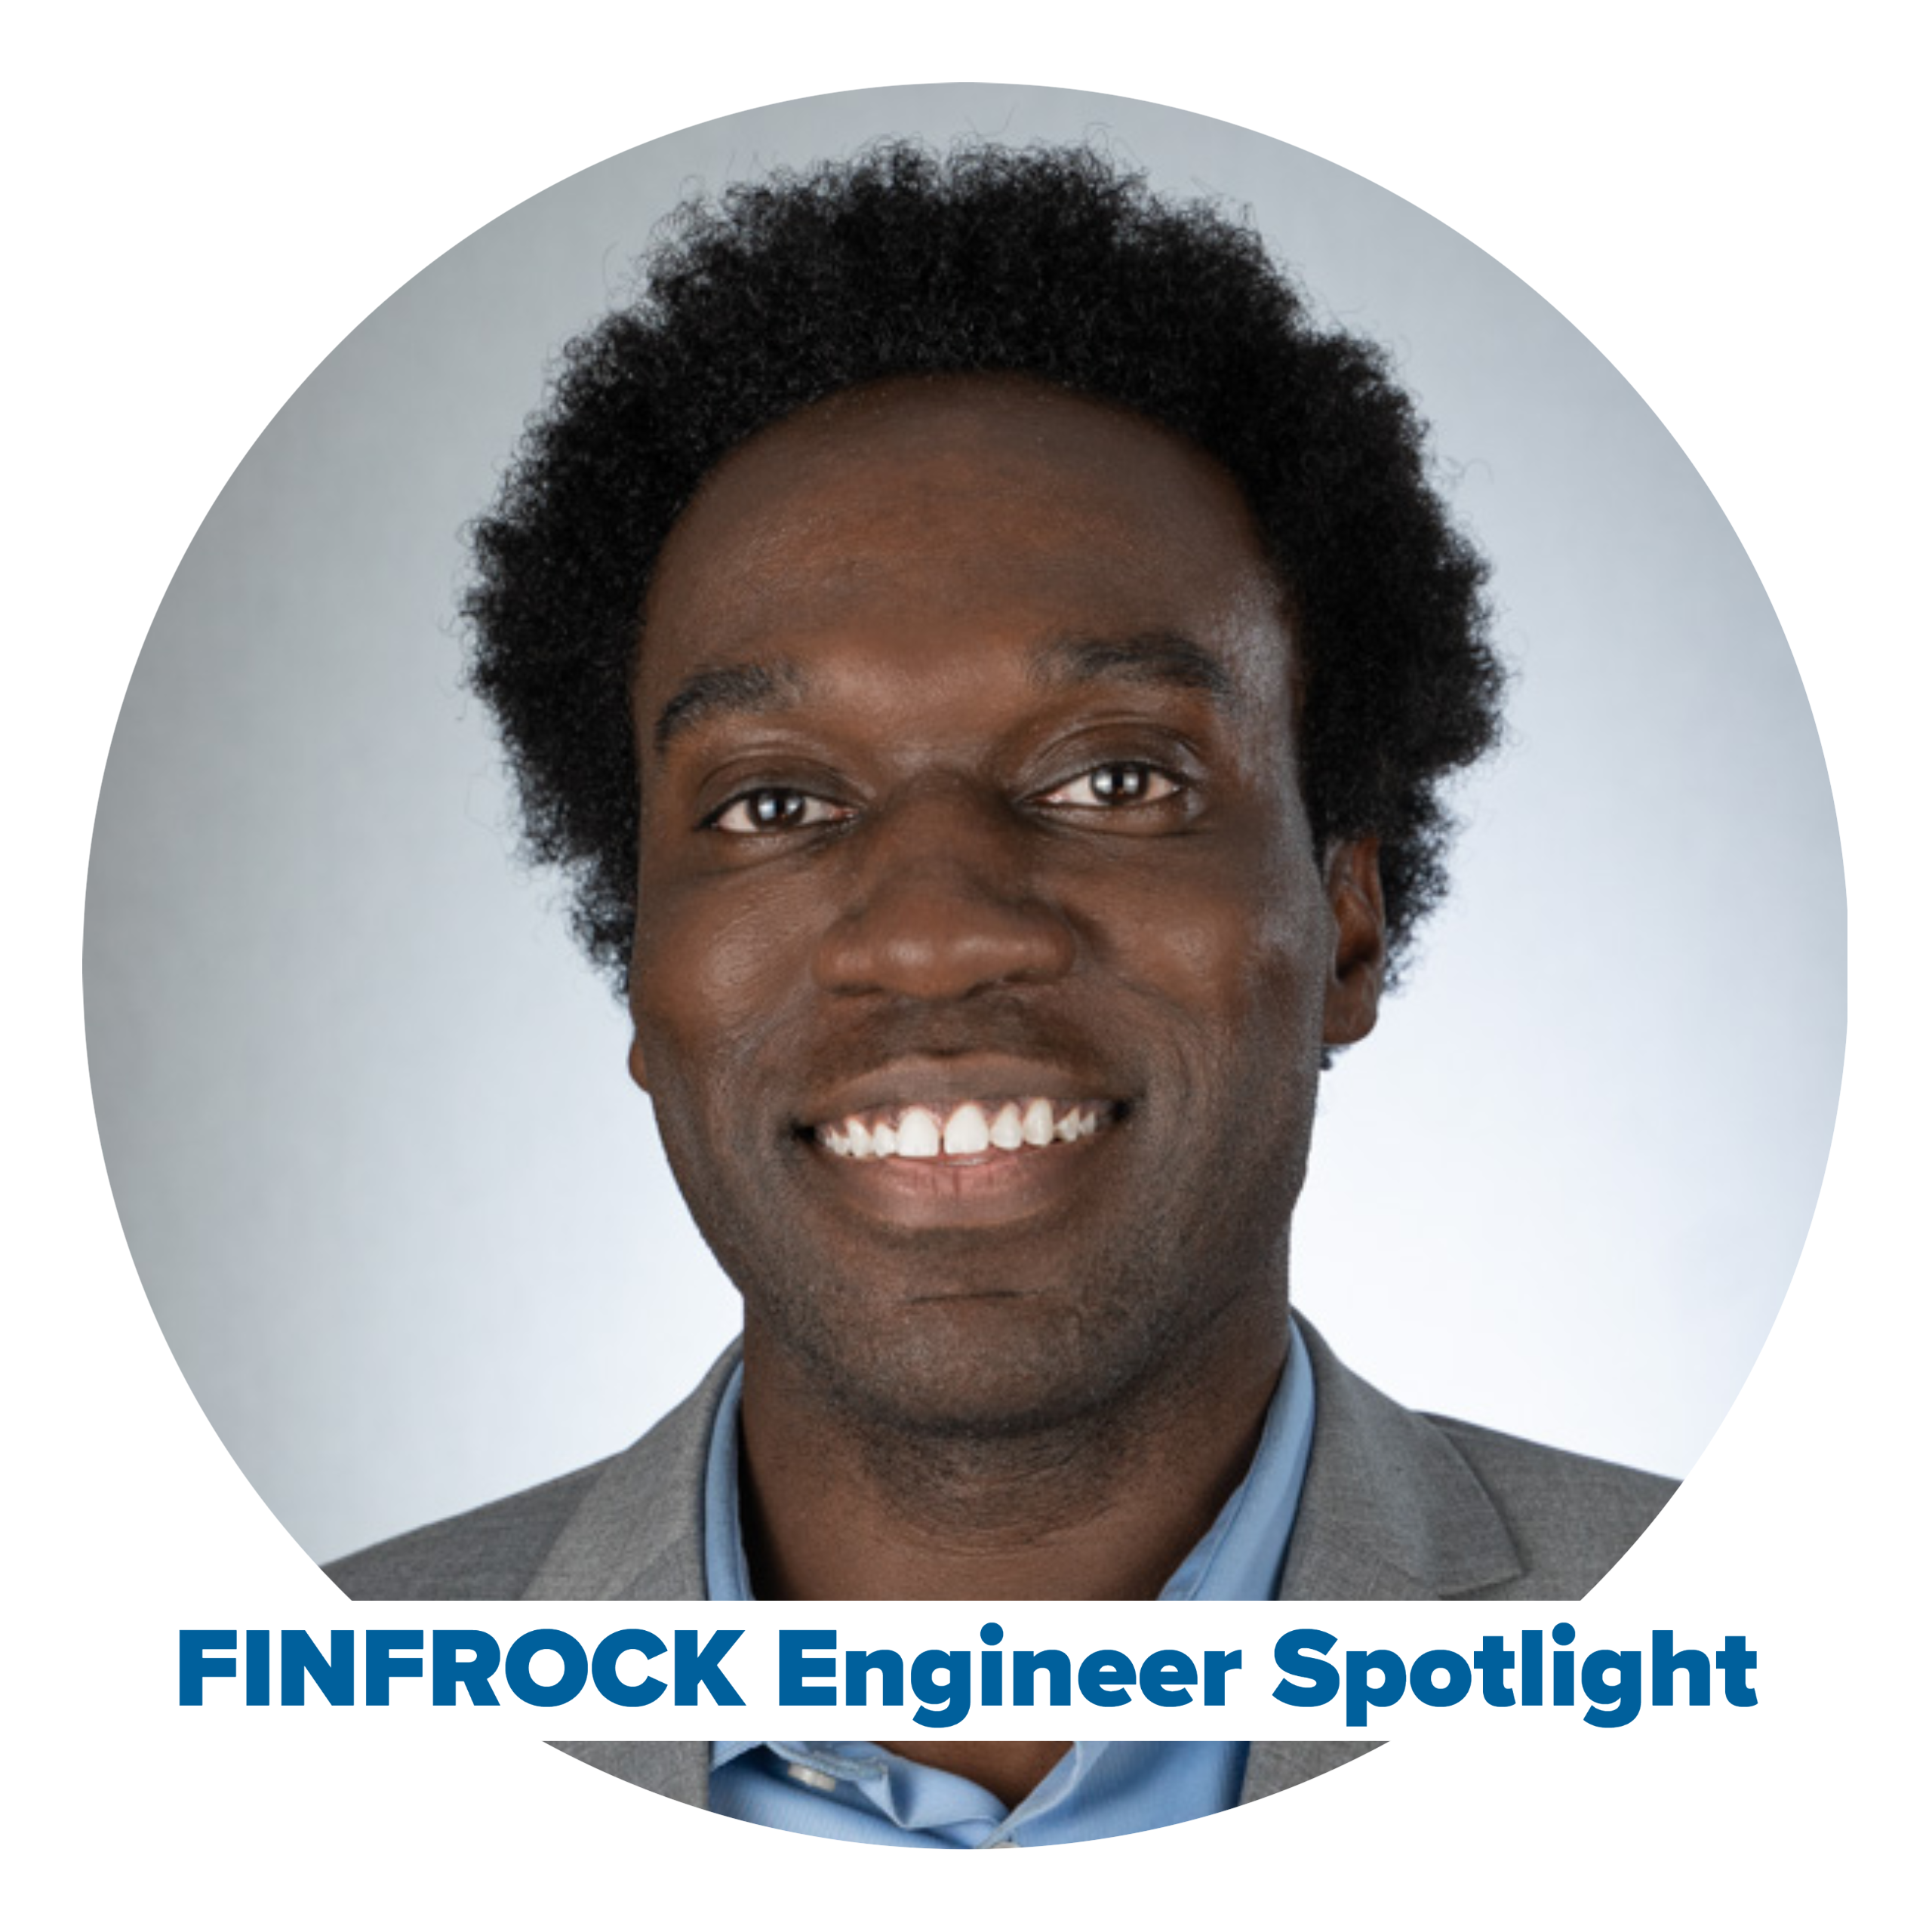 Headshot image of FINFROCK engineer